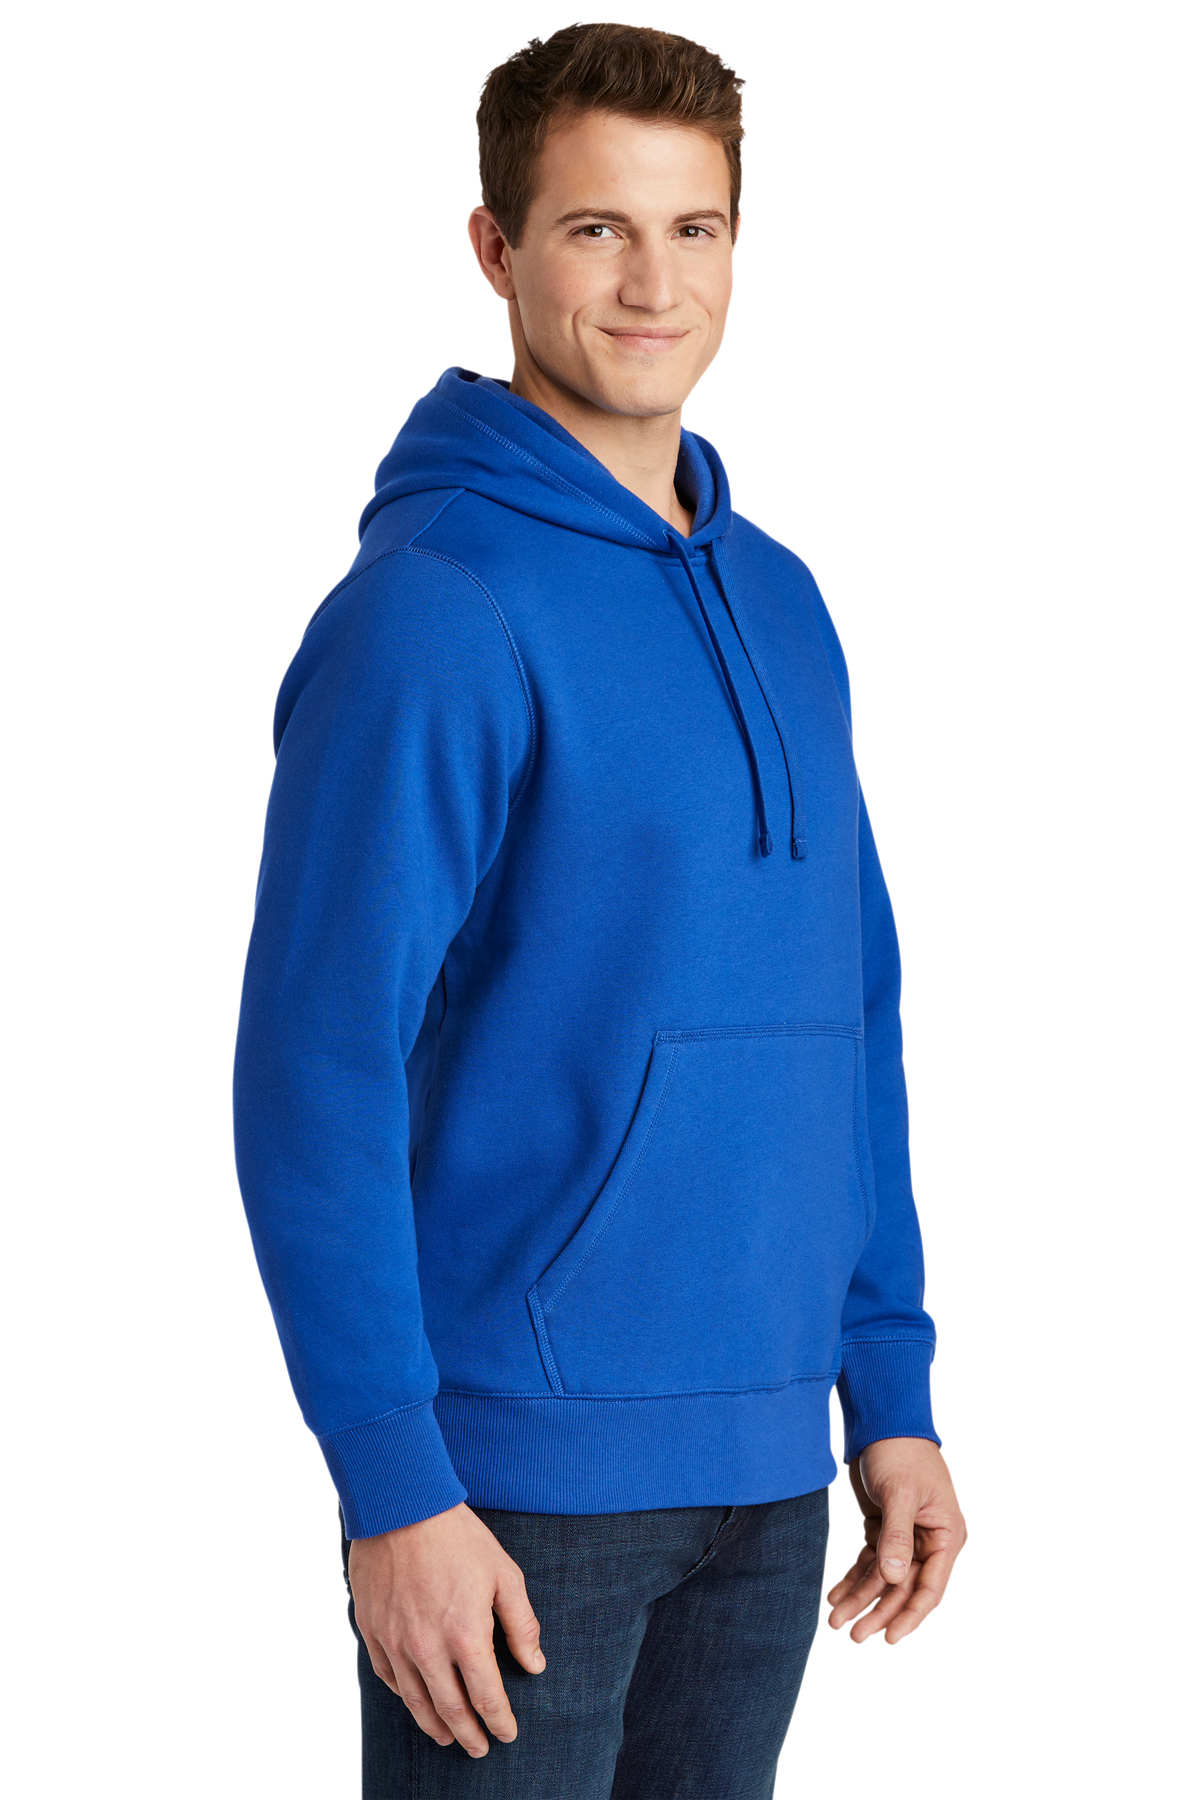 Ruckfitt College Hoodies, Sports Team Sweatshirt, Louisville Hoodie, Adult Unisex, Size: Large, Blue